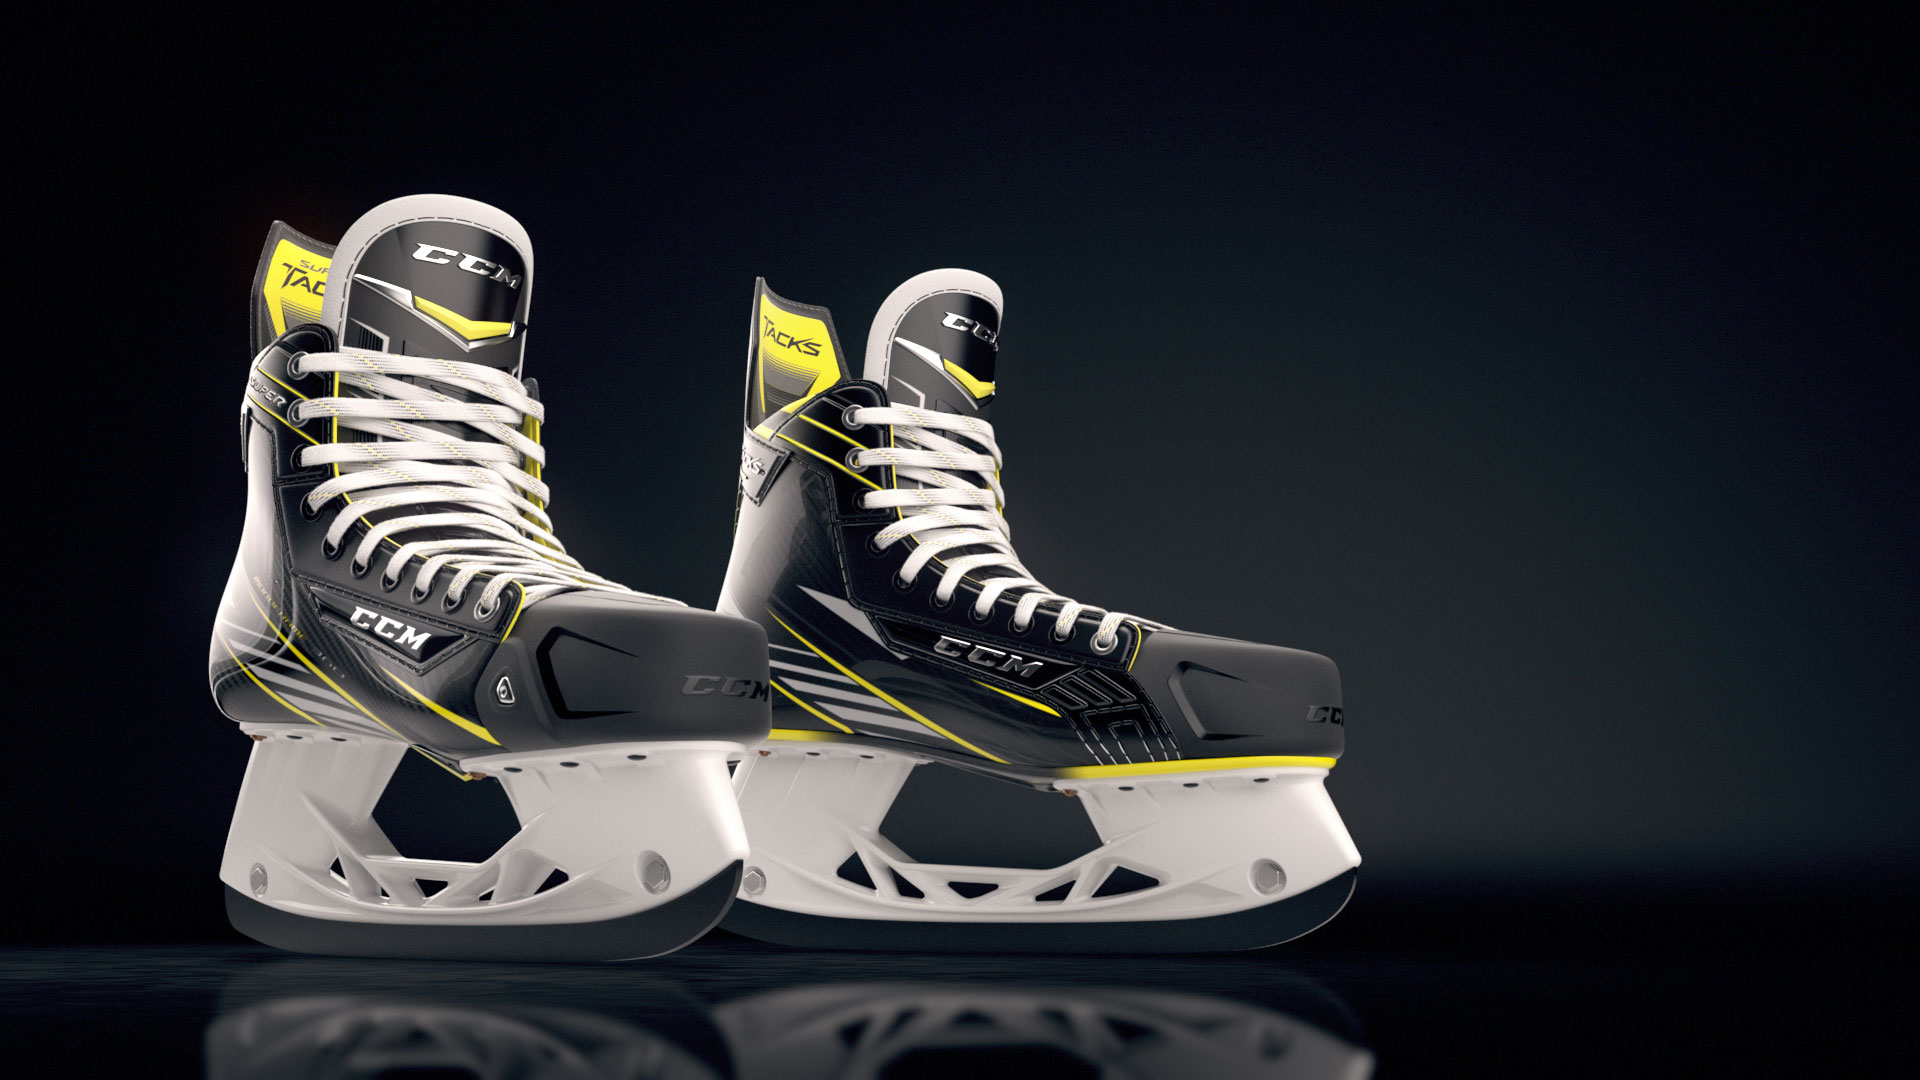 Product shot of hockey skates.